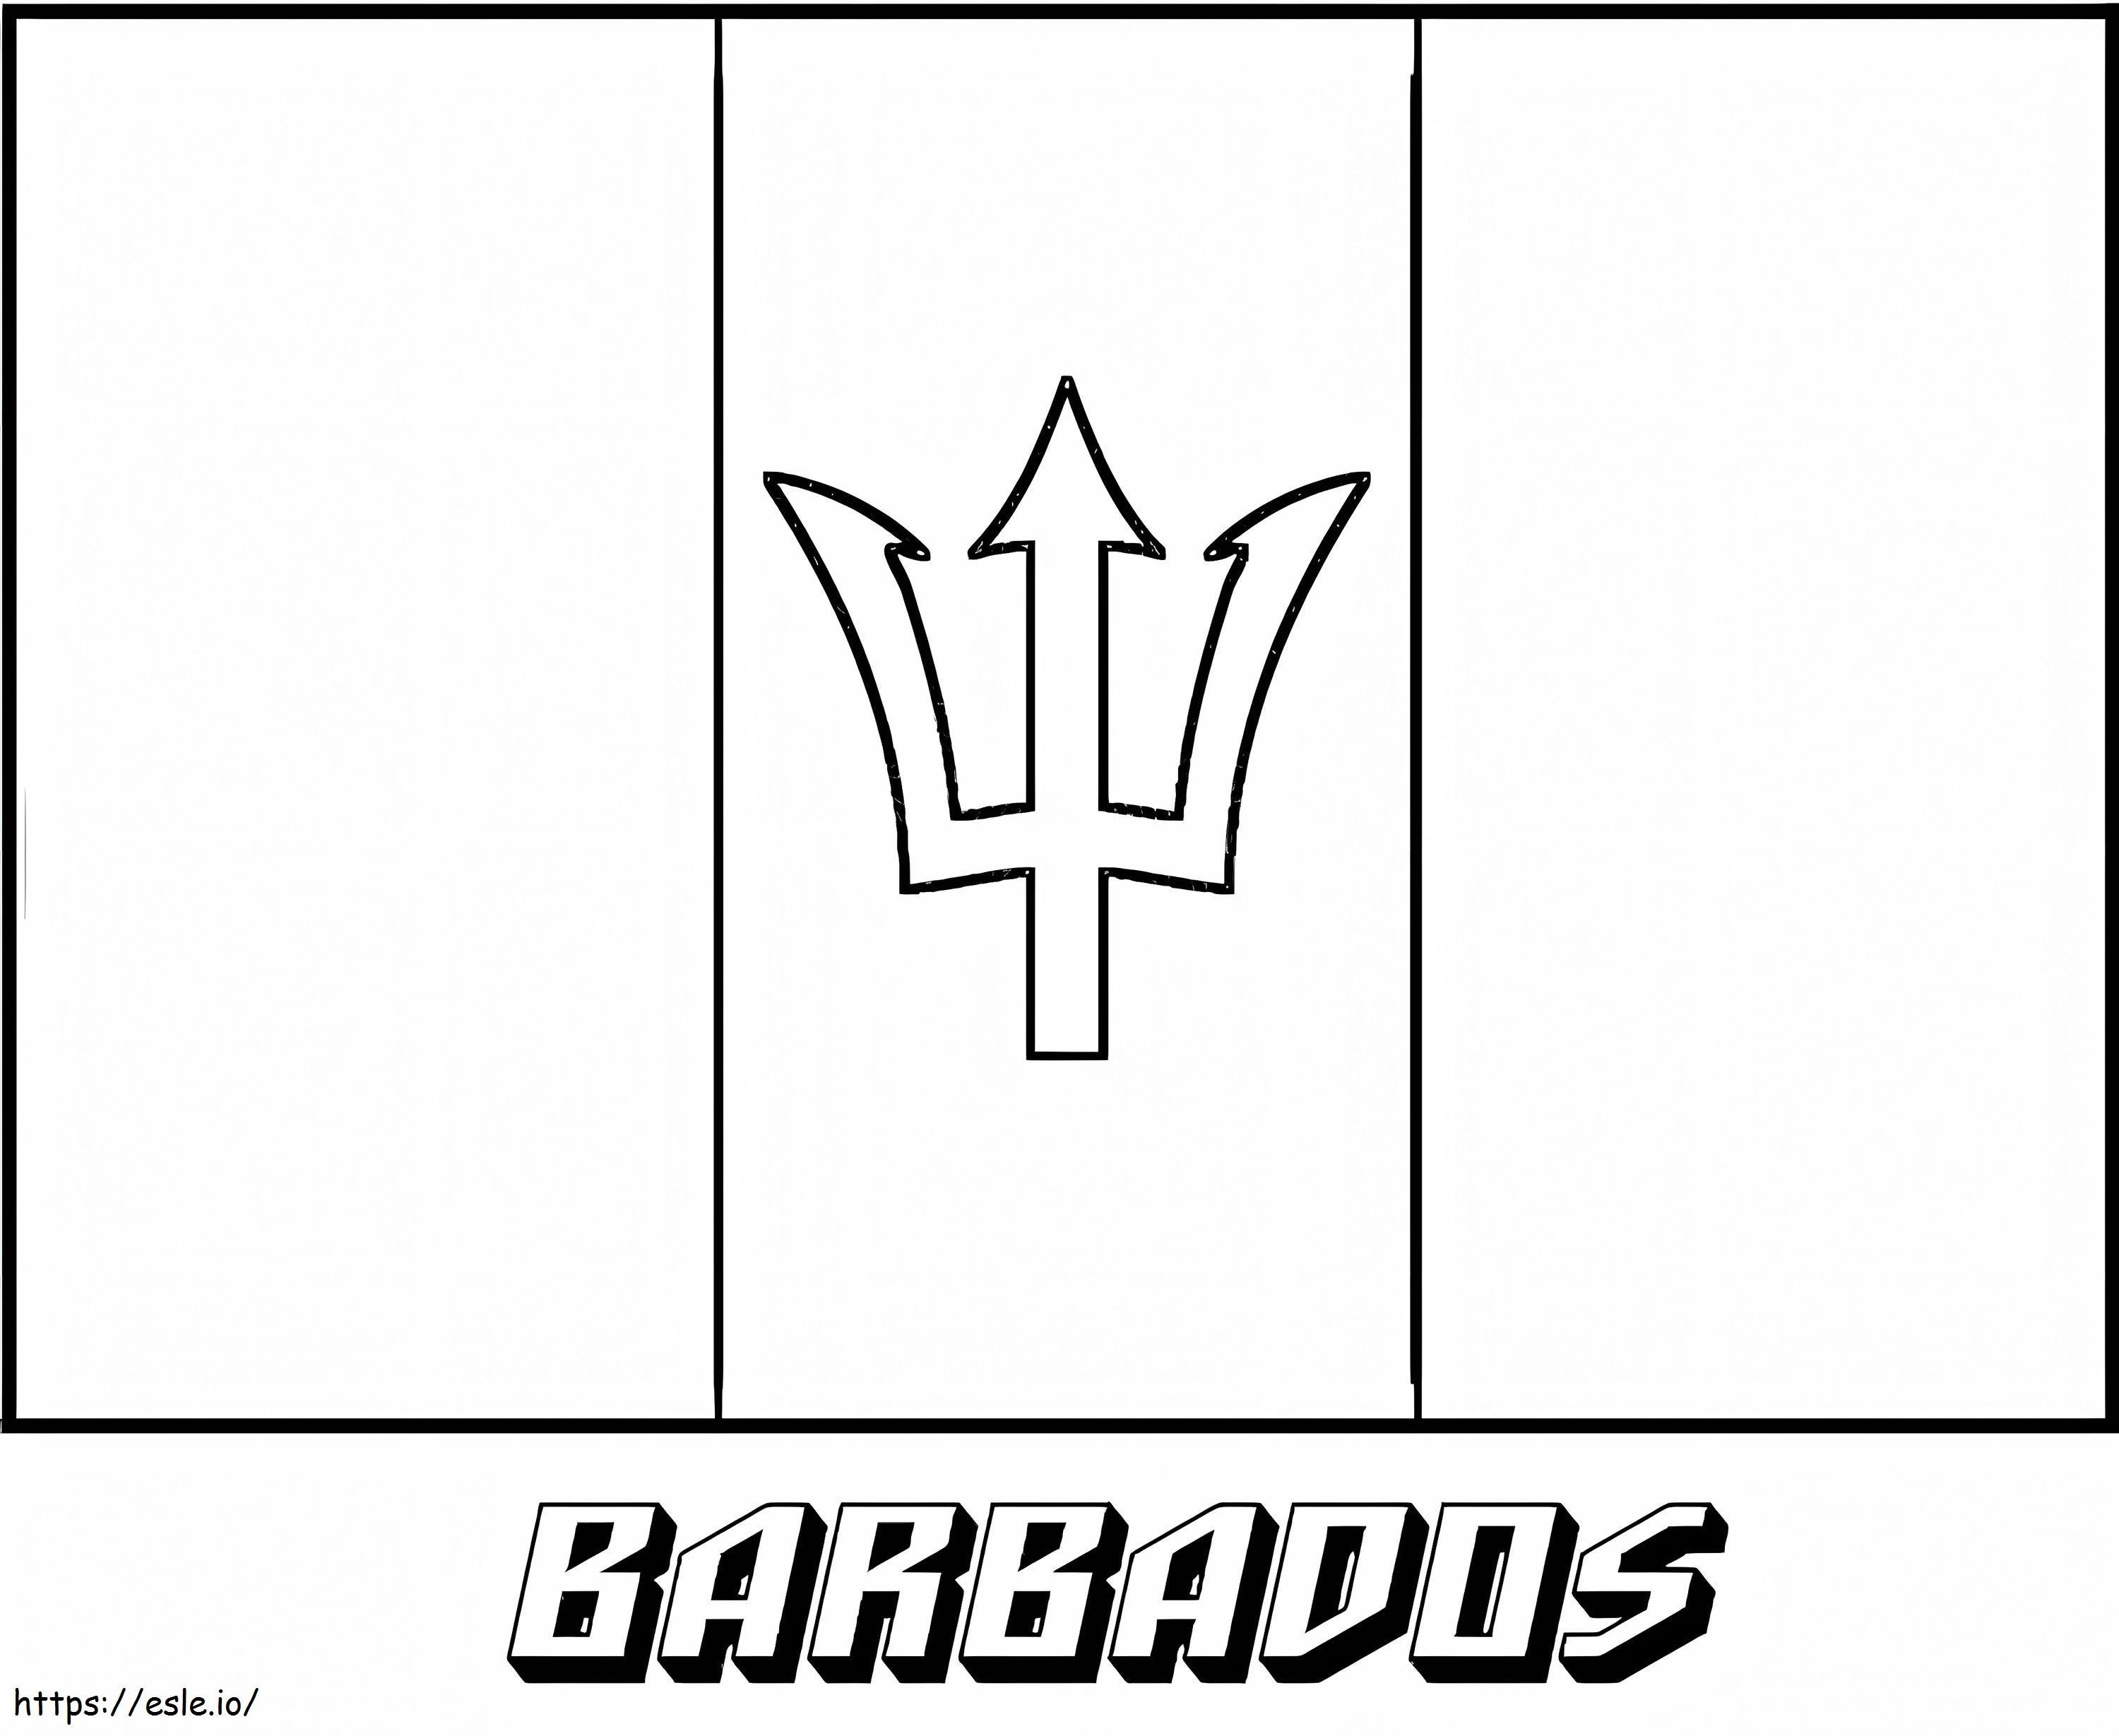 Steagul Barbados de colorat